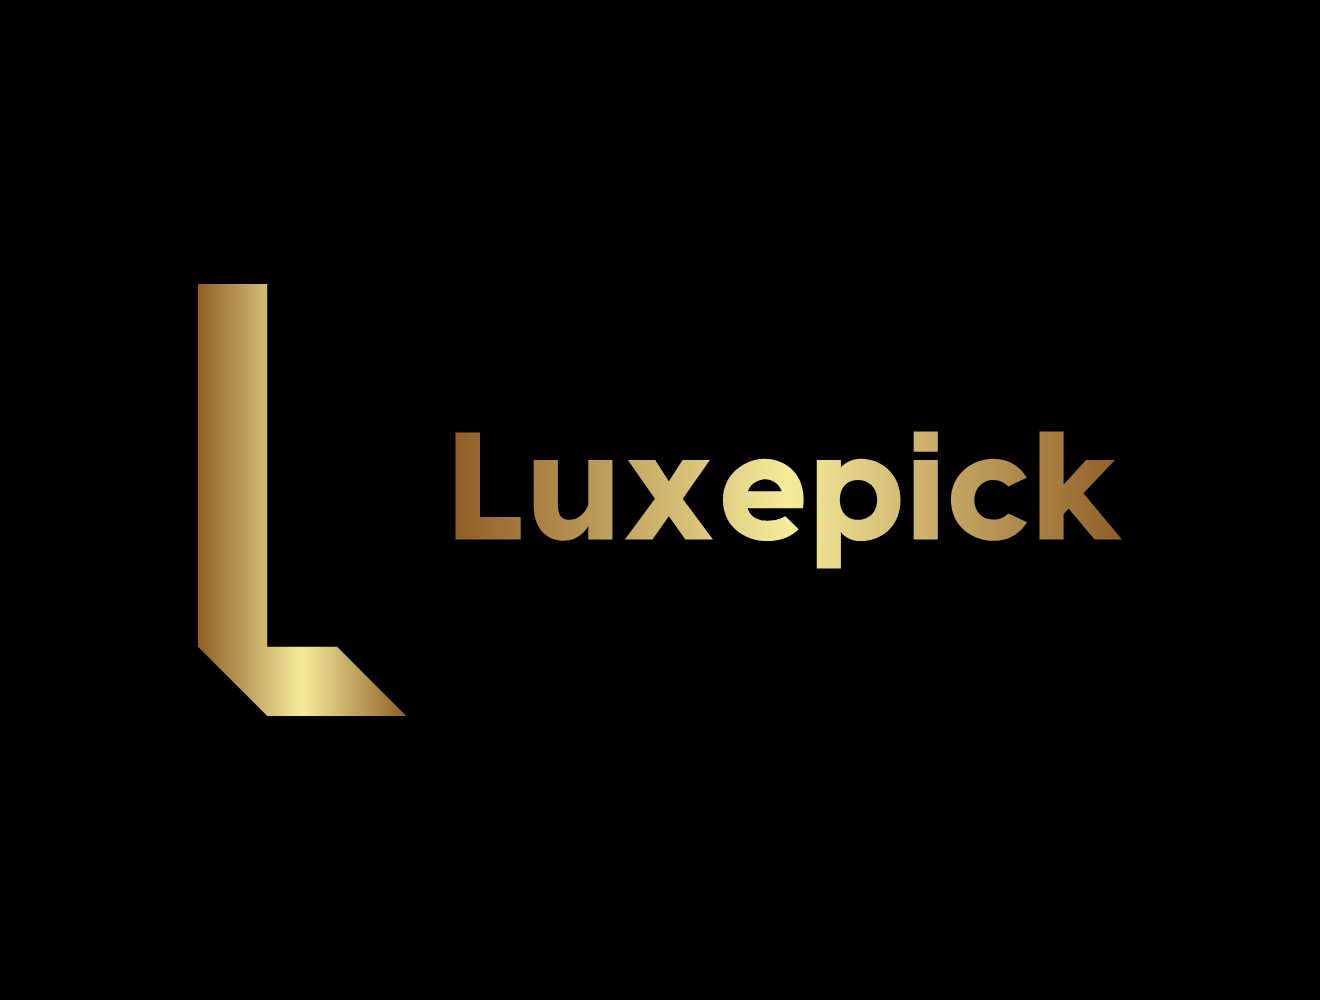 Luxepick